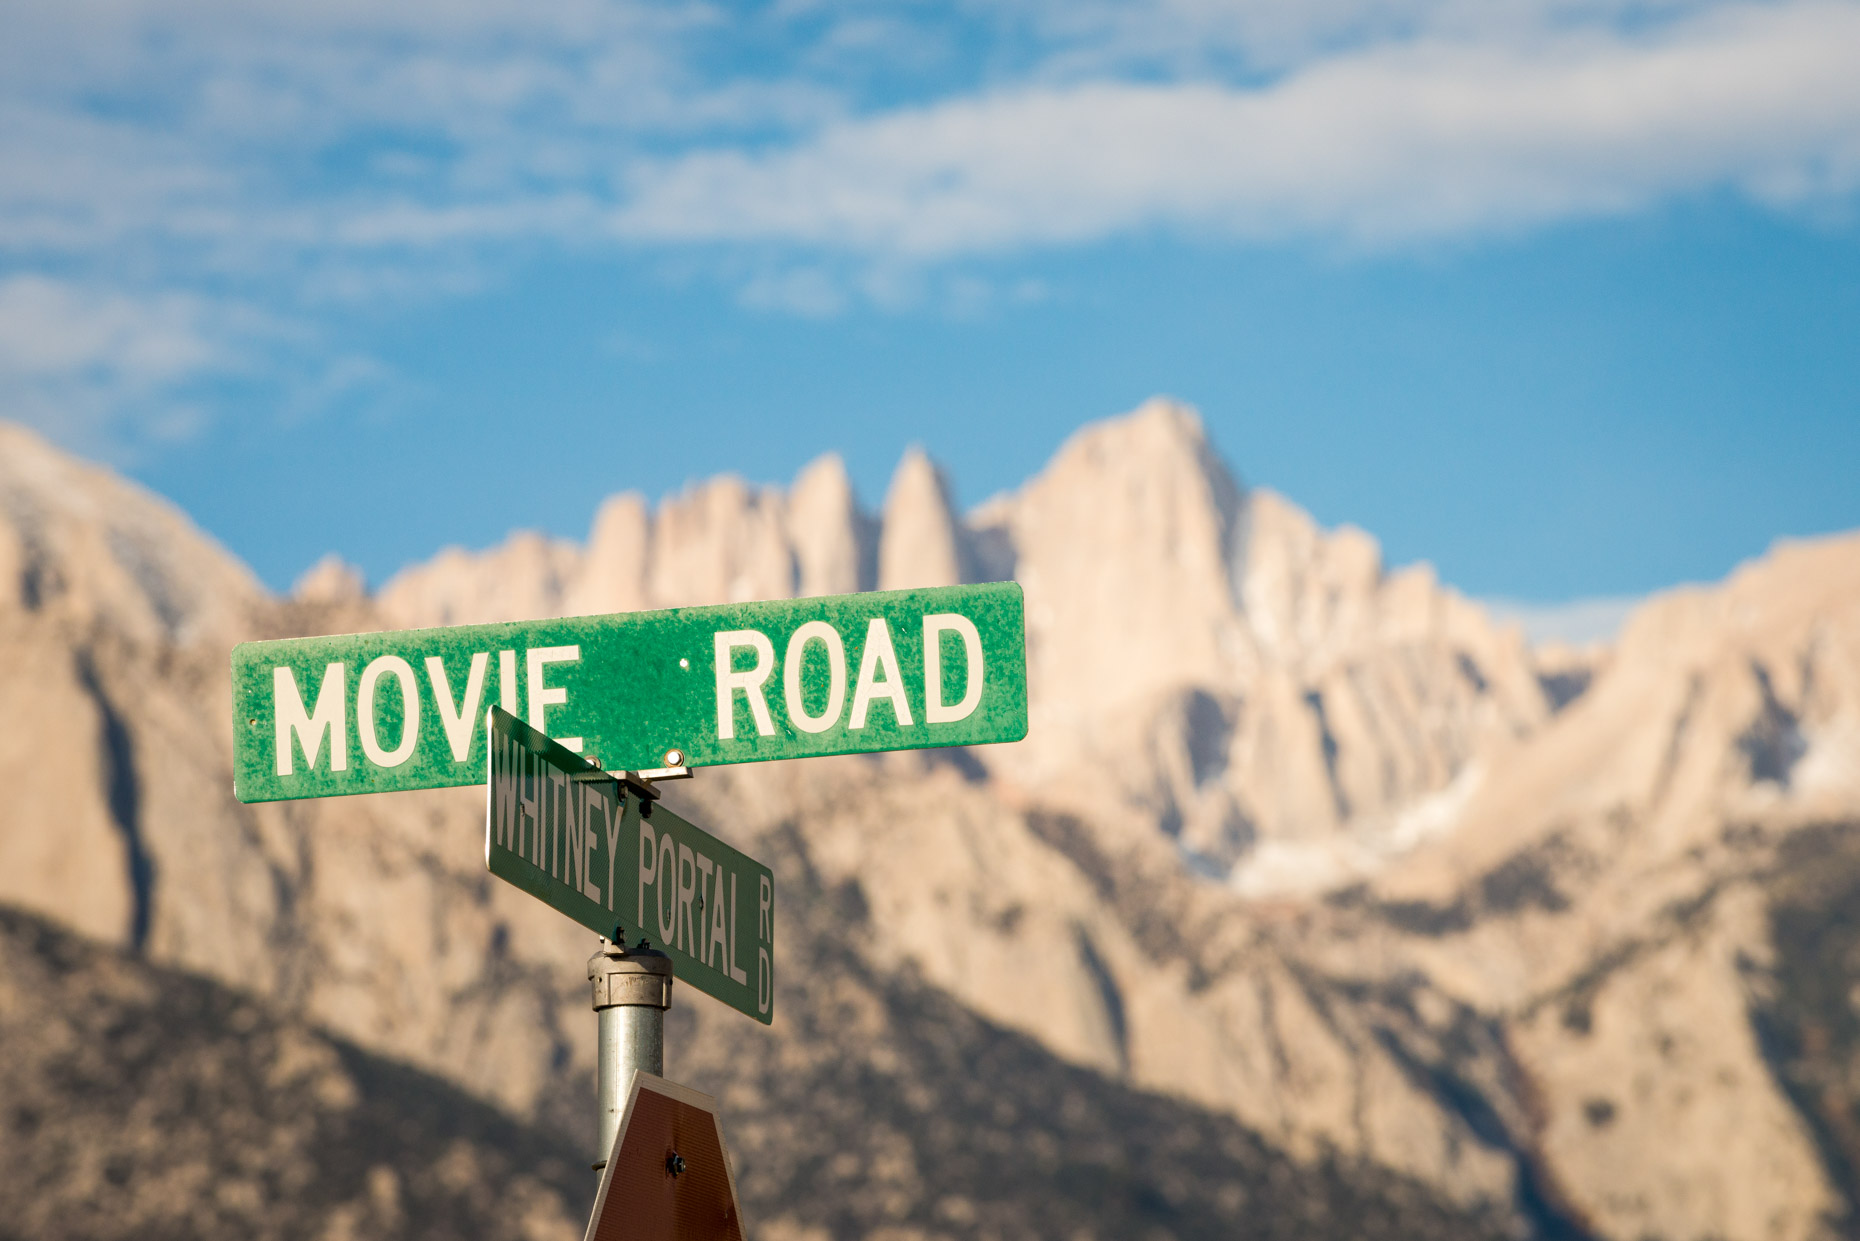 Movie Road - Alabama Hills, Lone Pine, California